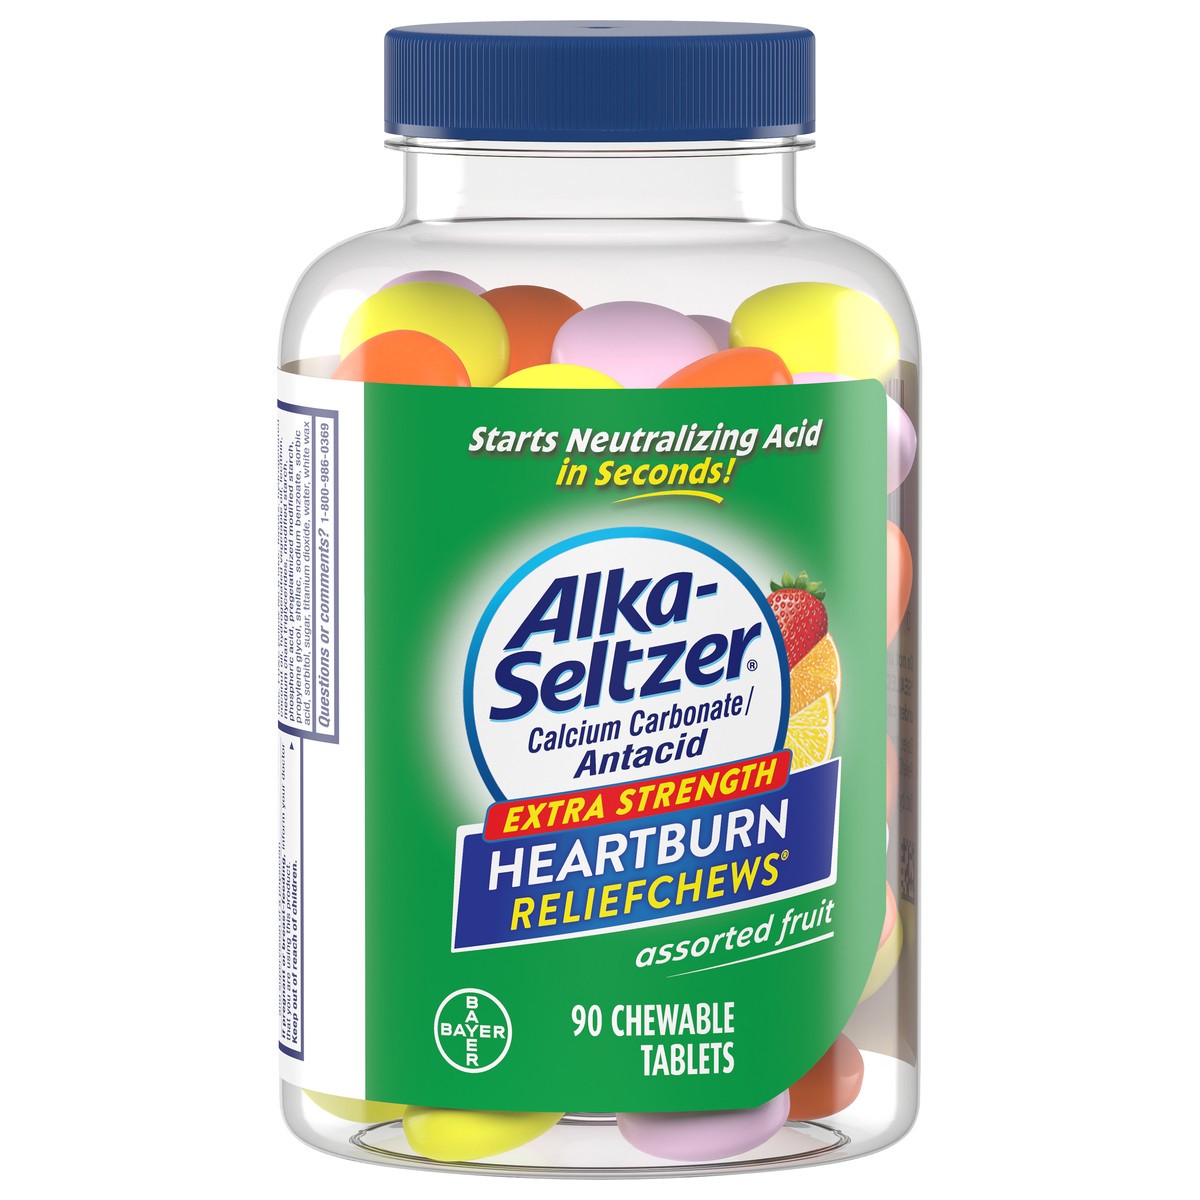 slide 5 of 11, Alka-Seltzer Heartburn ReliefChews Extra Strength Assorted Fruit Calcium Carbonate/Antacid Chewable Tablets 90 ea, 90 ct